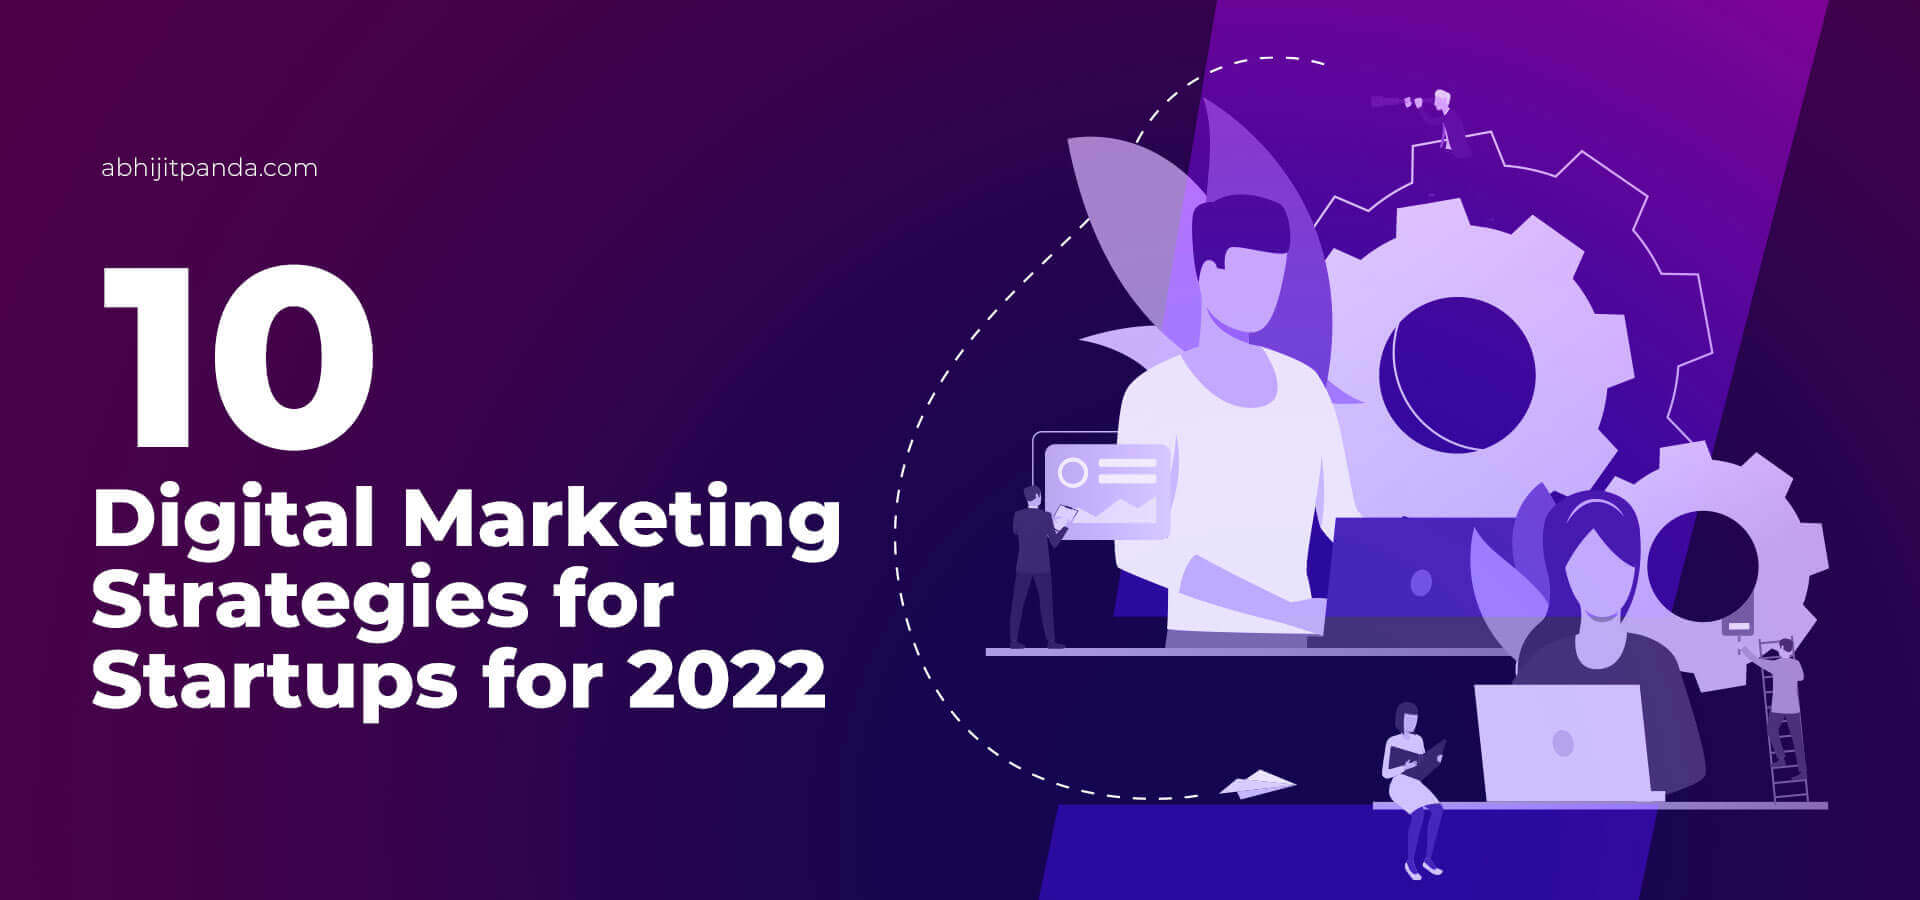 13 Digital Marketing Strategies for Startups for 2022